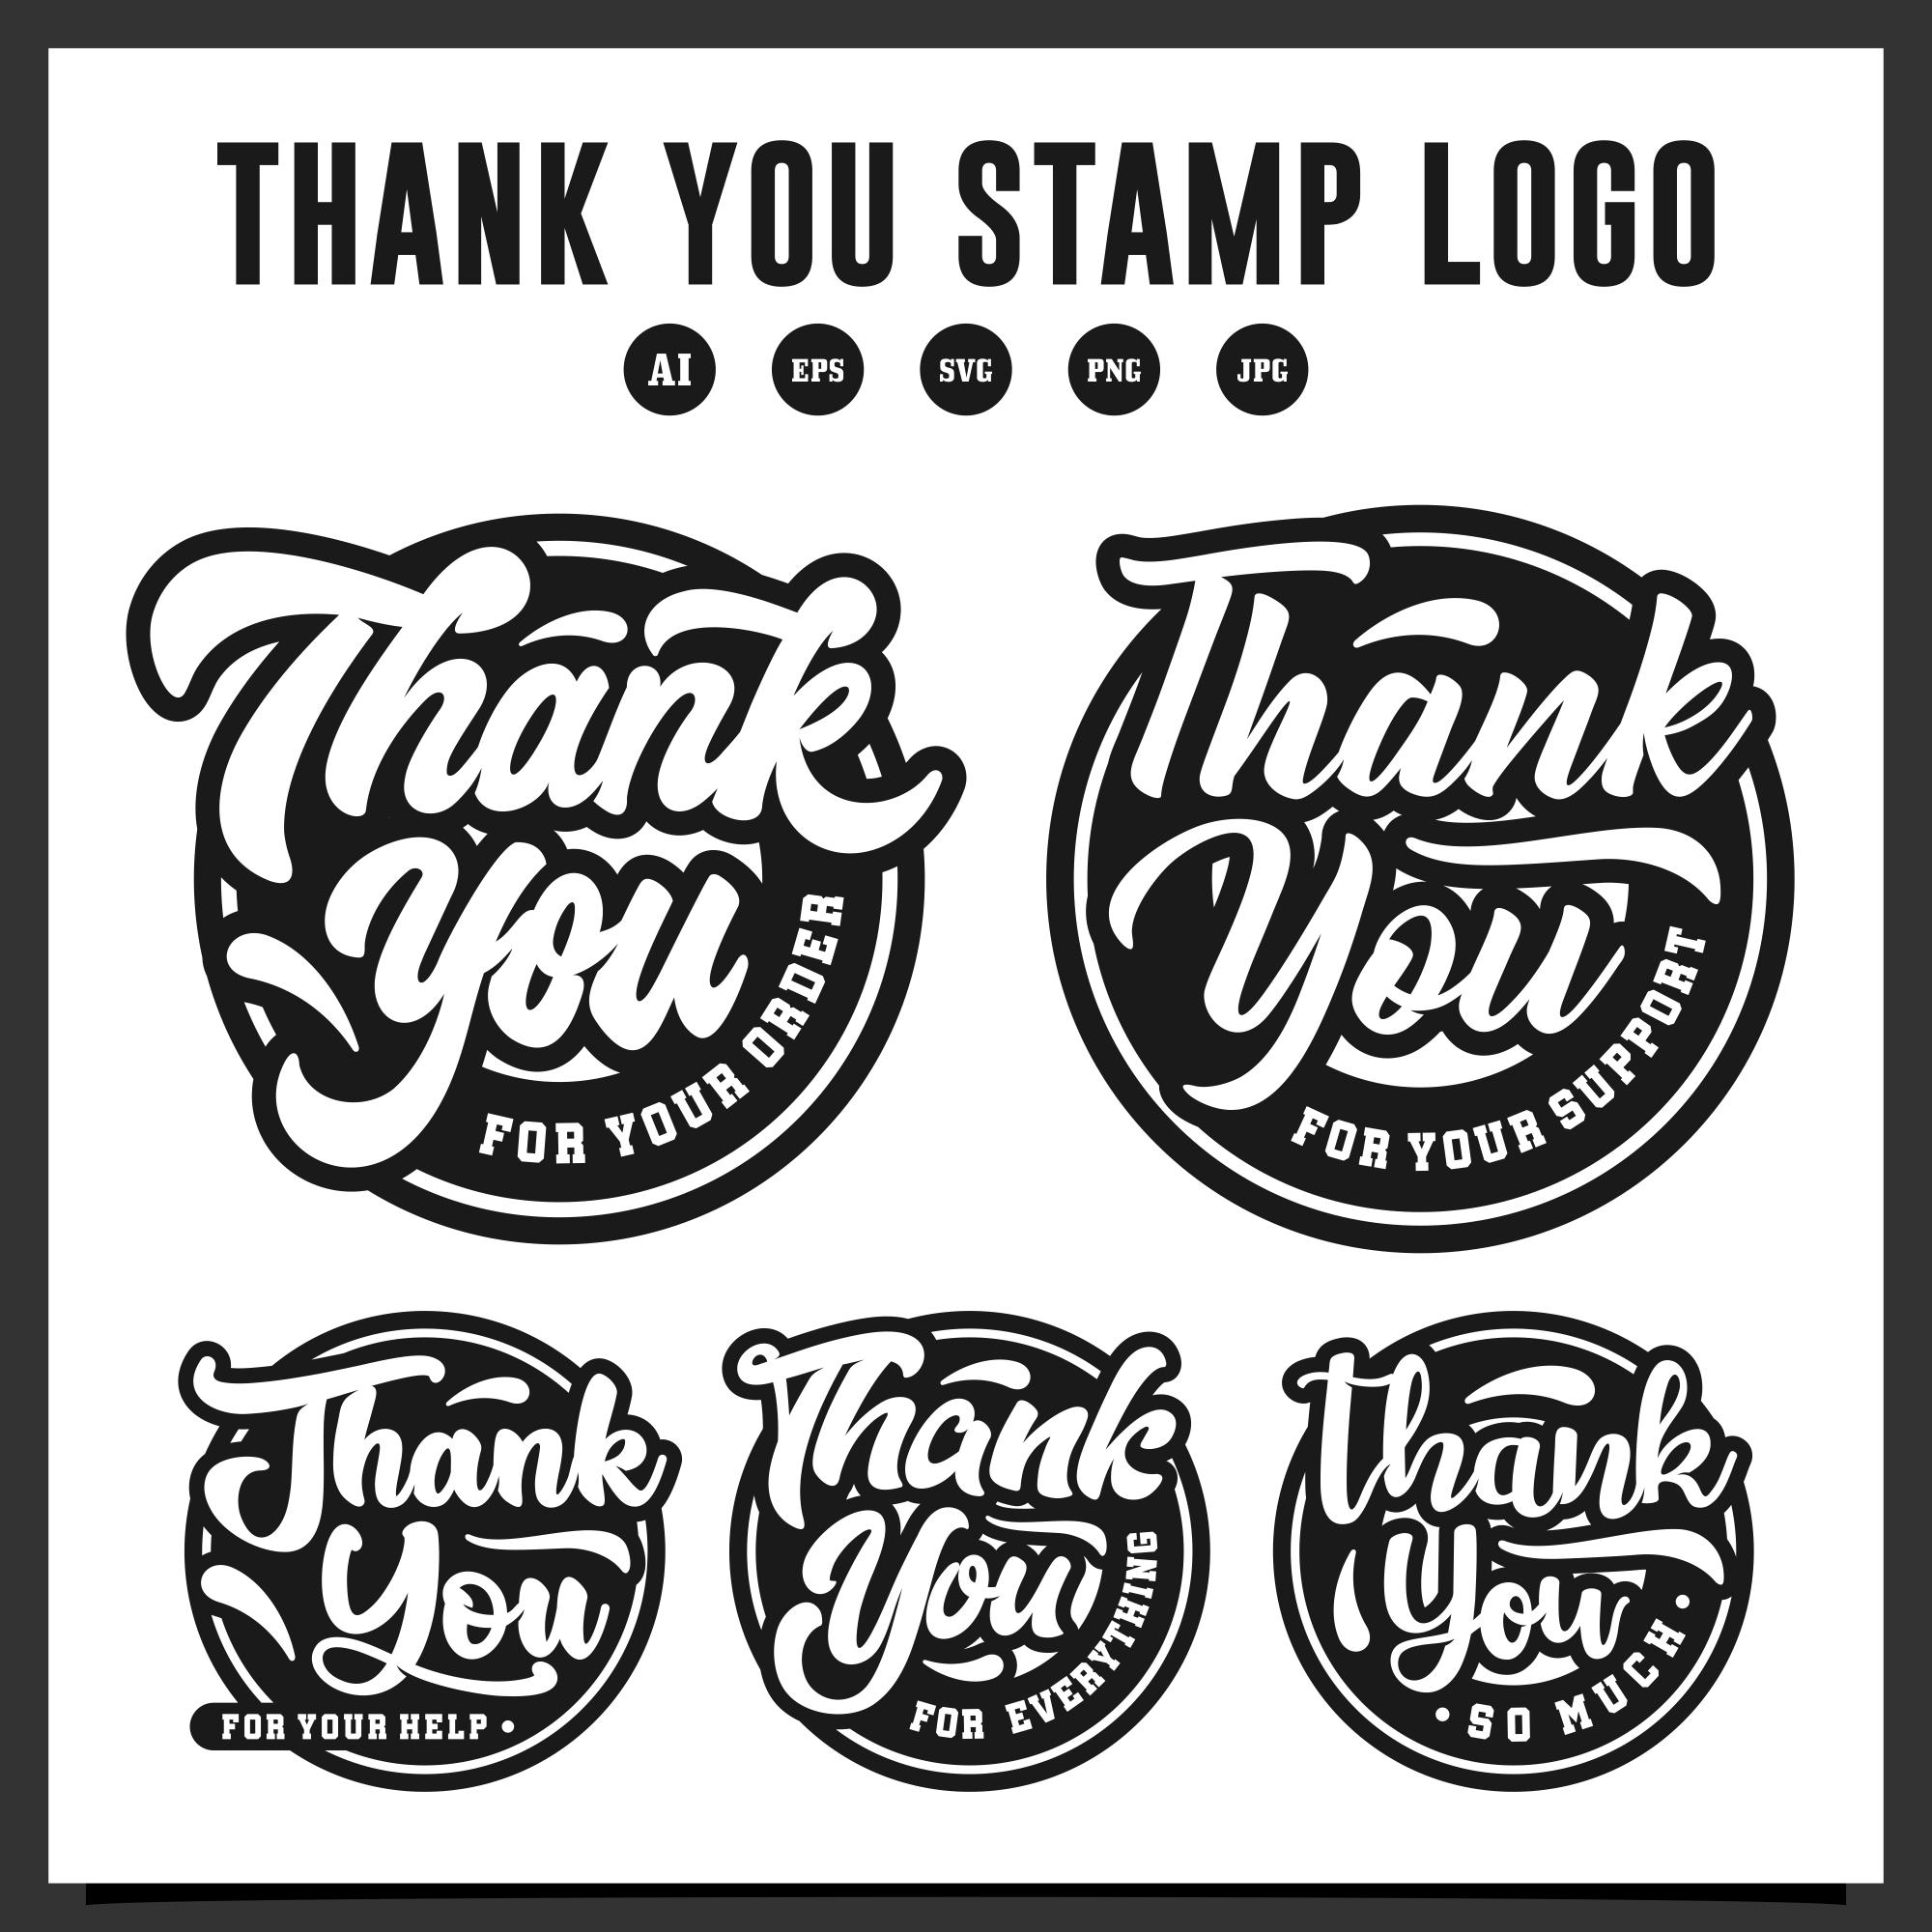 Set thank you stamp logo design collection - $10 - MasterBundles